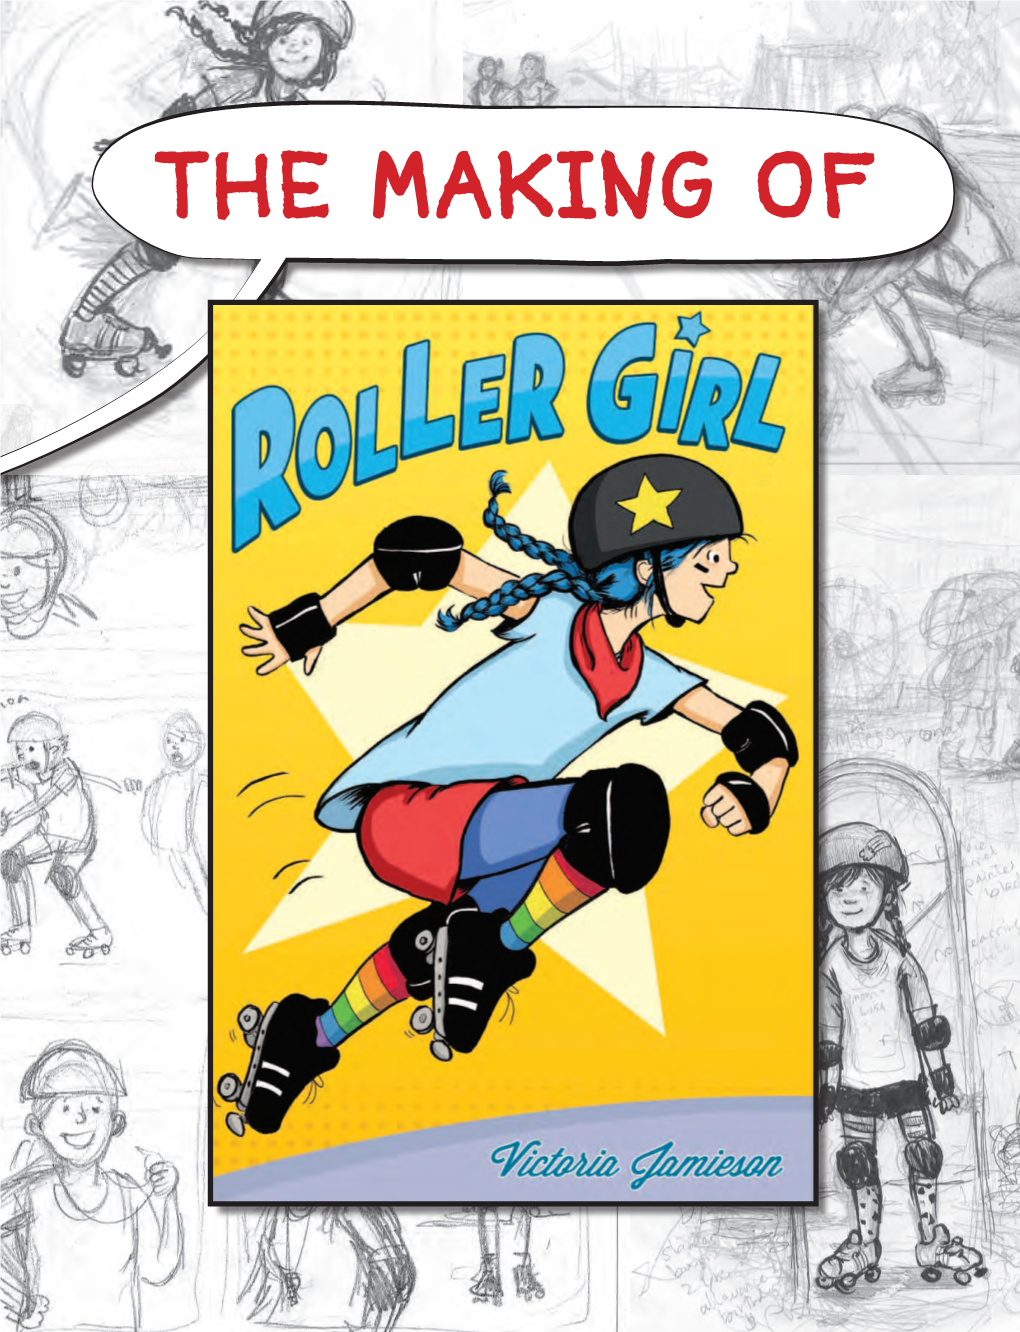 The Making of Roller Girl